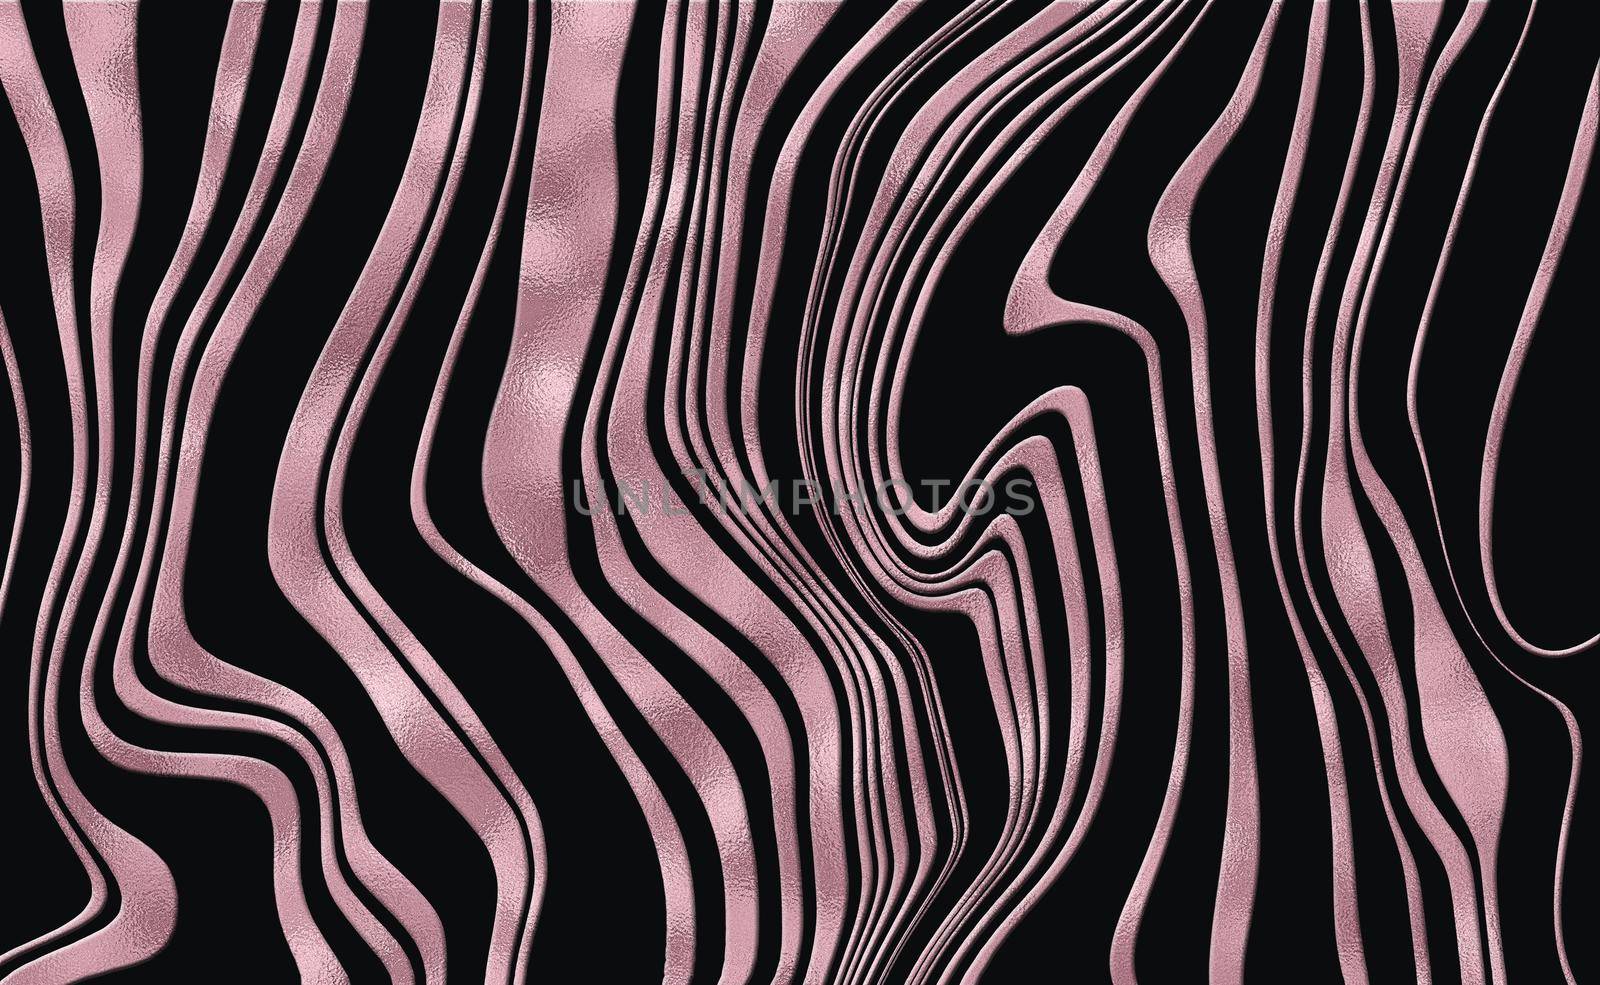 Zebra abstract stripes by NelliPolk